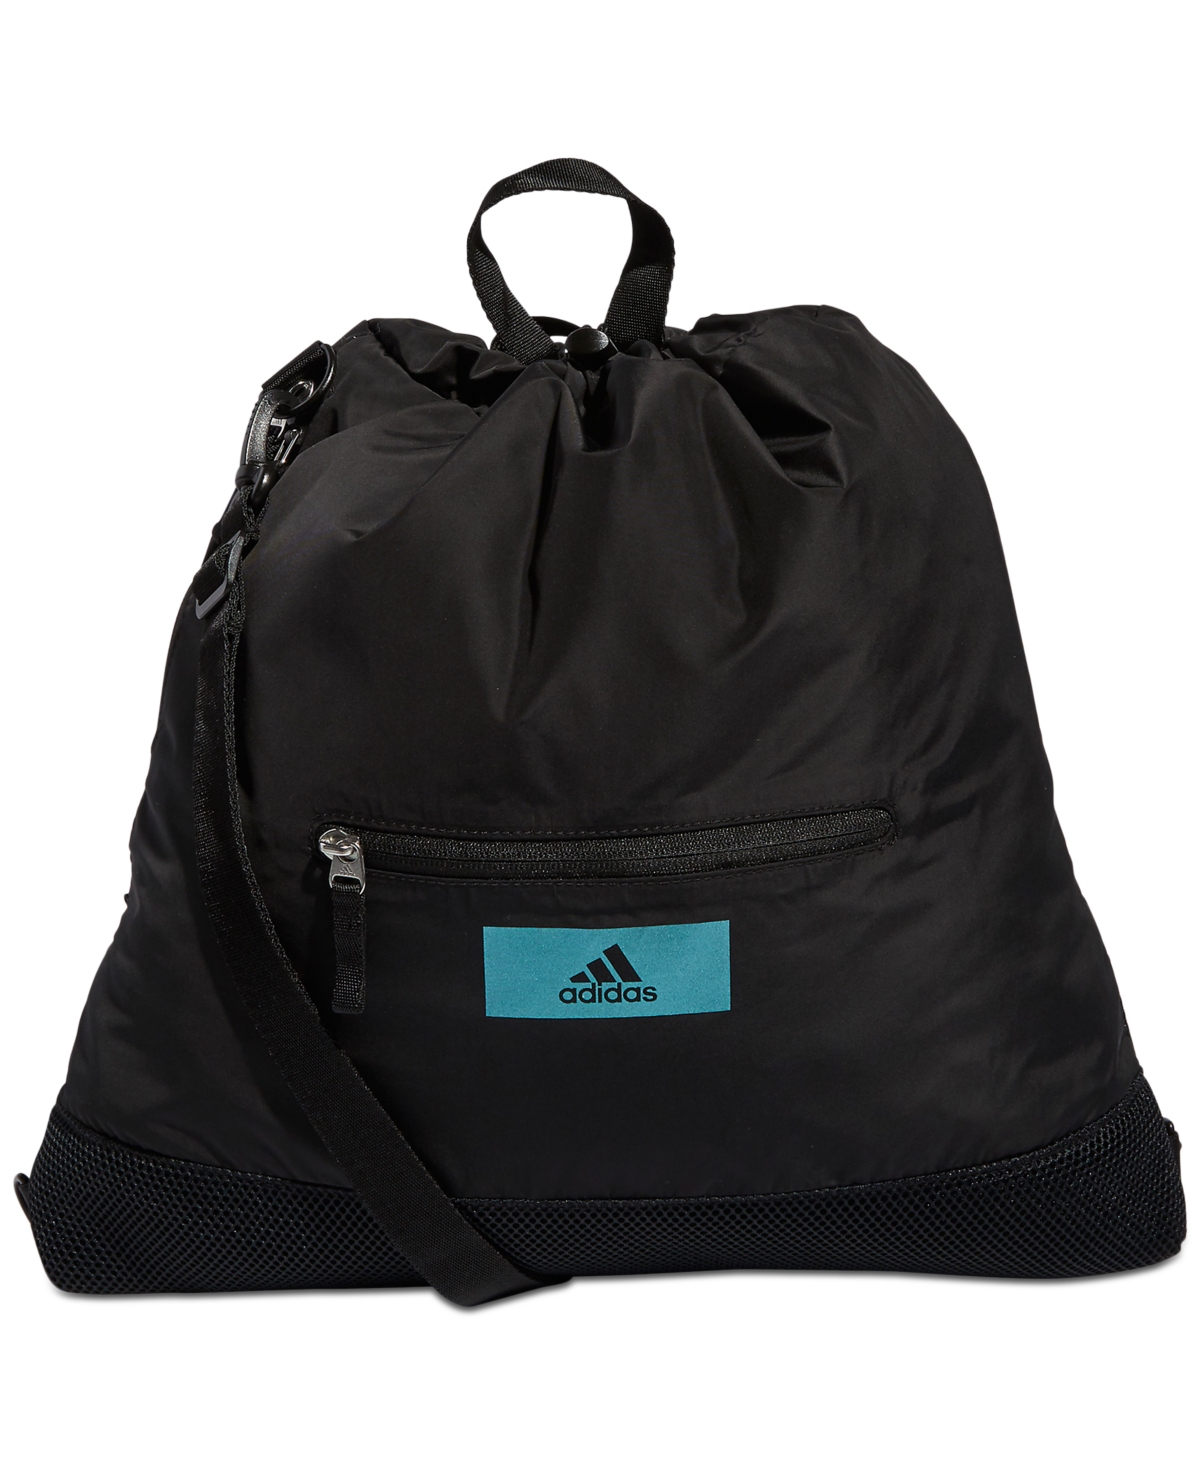 adidas Unisex Squad Convertible Crossbody Bag